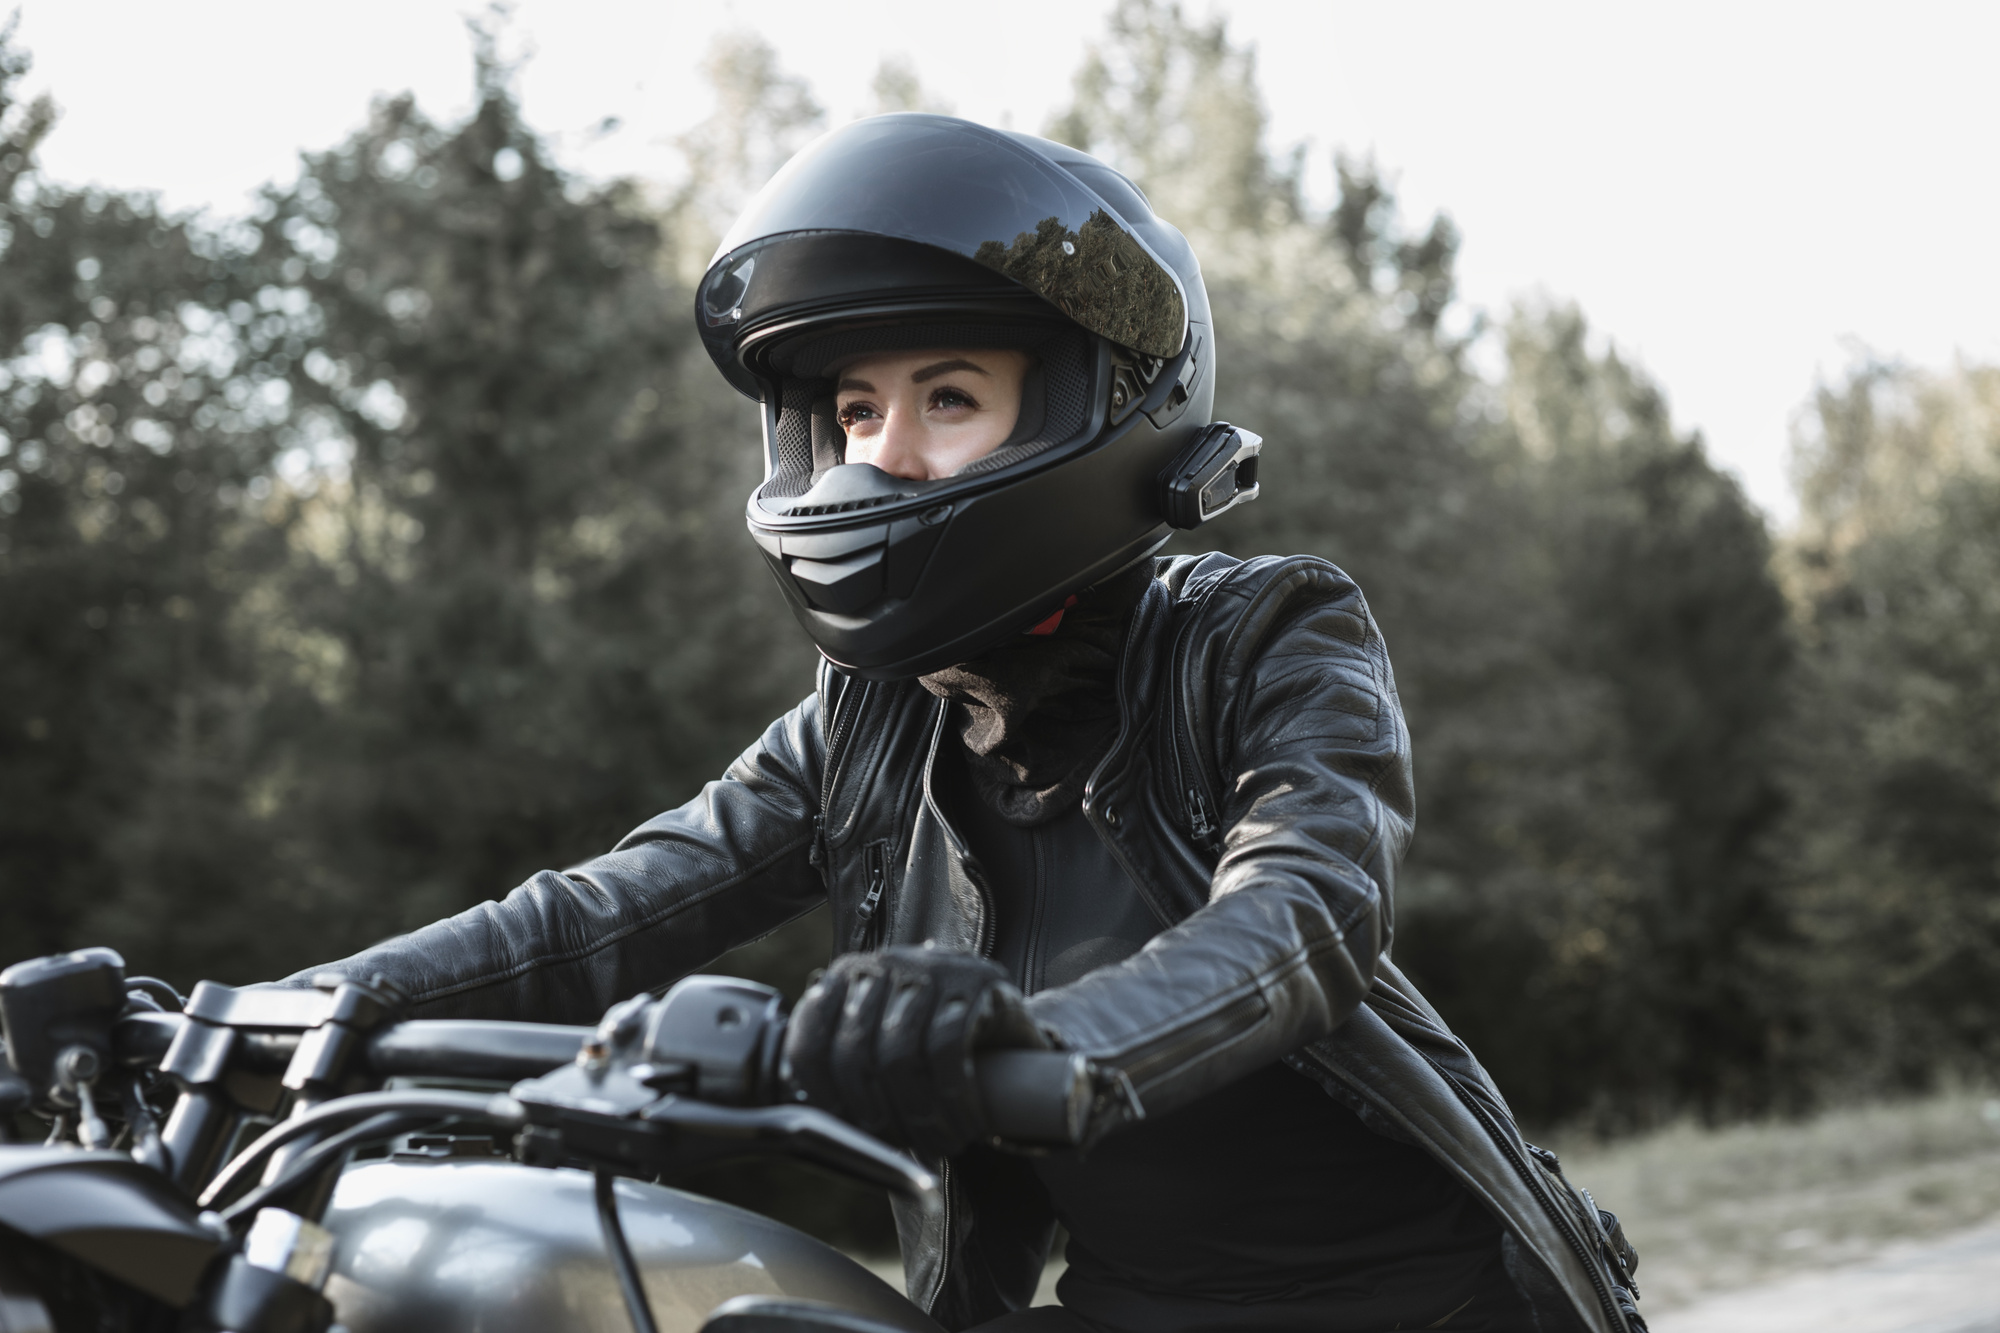 Novelty Motorcycle Helmets For Women